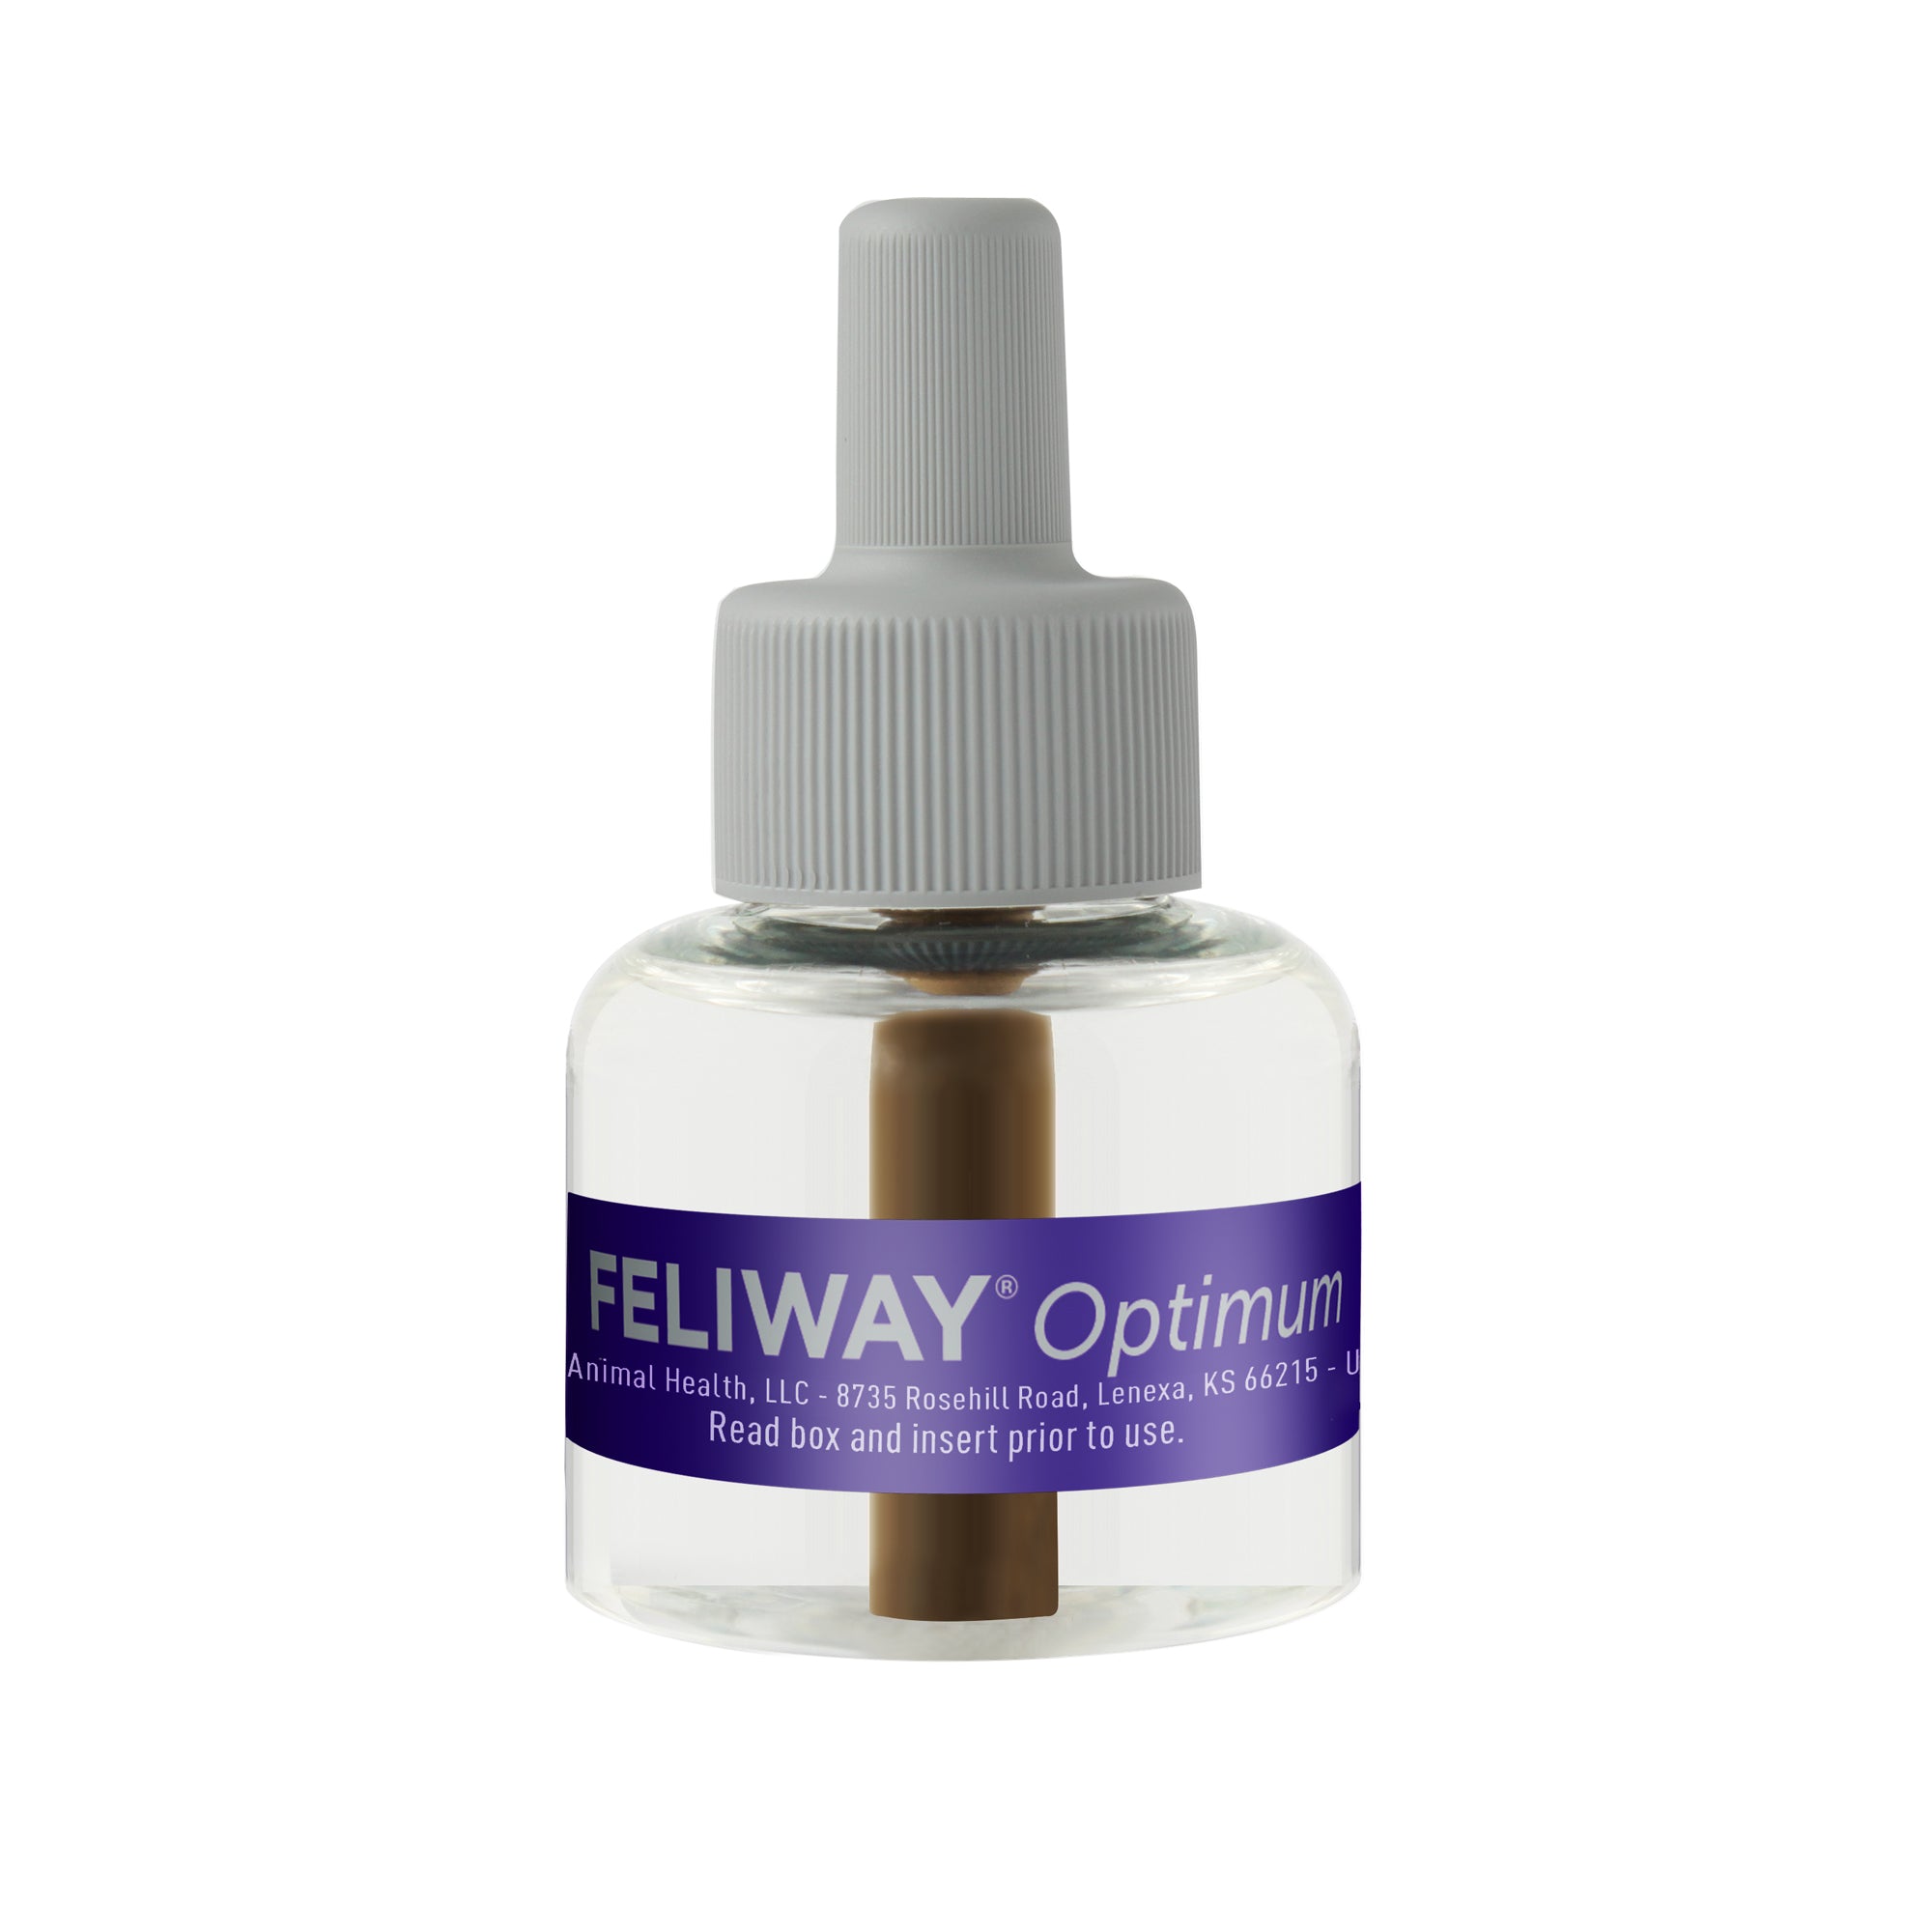 FELIWAY Optimum, Enhanced Calming Pheromone 30-day Refill – 3 Pack